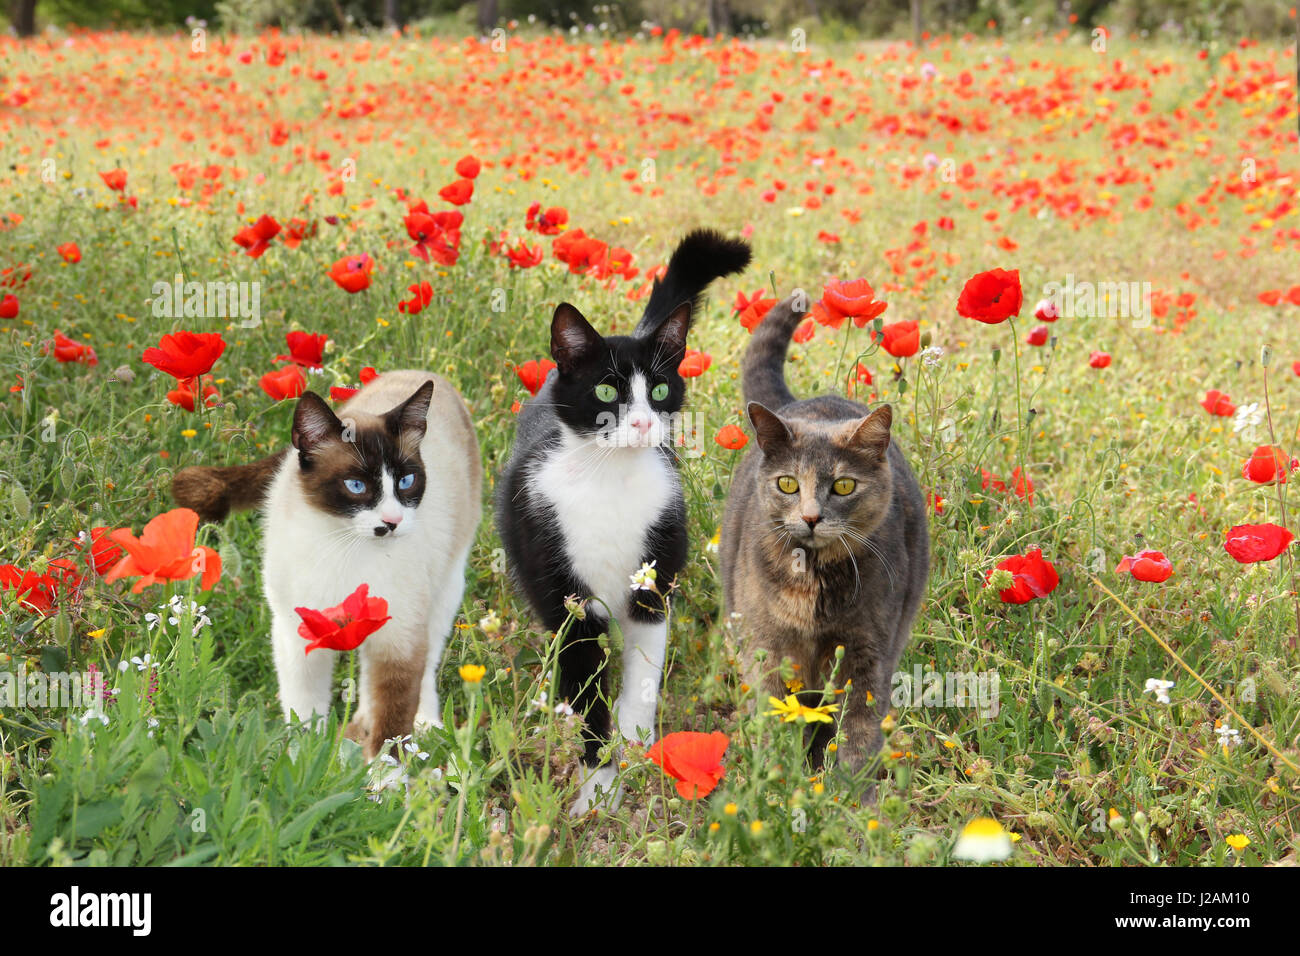 Three domestic cats, point, tuxedo, tortie, walking side by side on a flowering poppy meadow Stock Photo